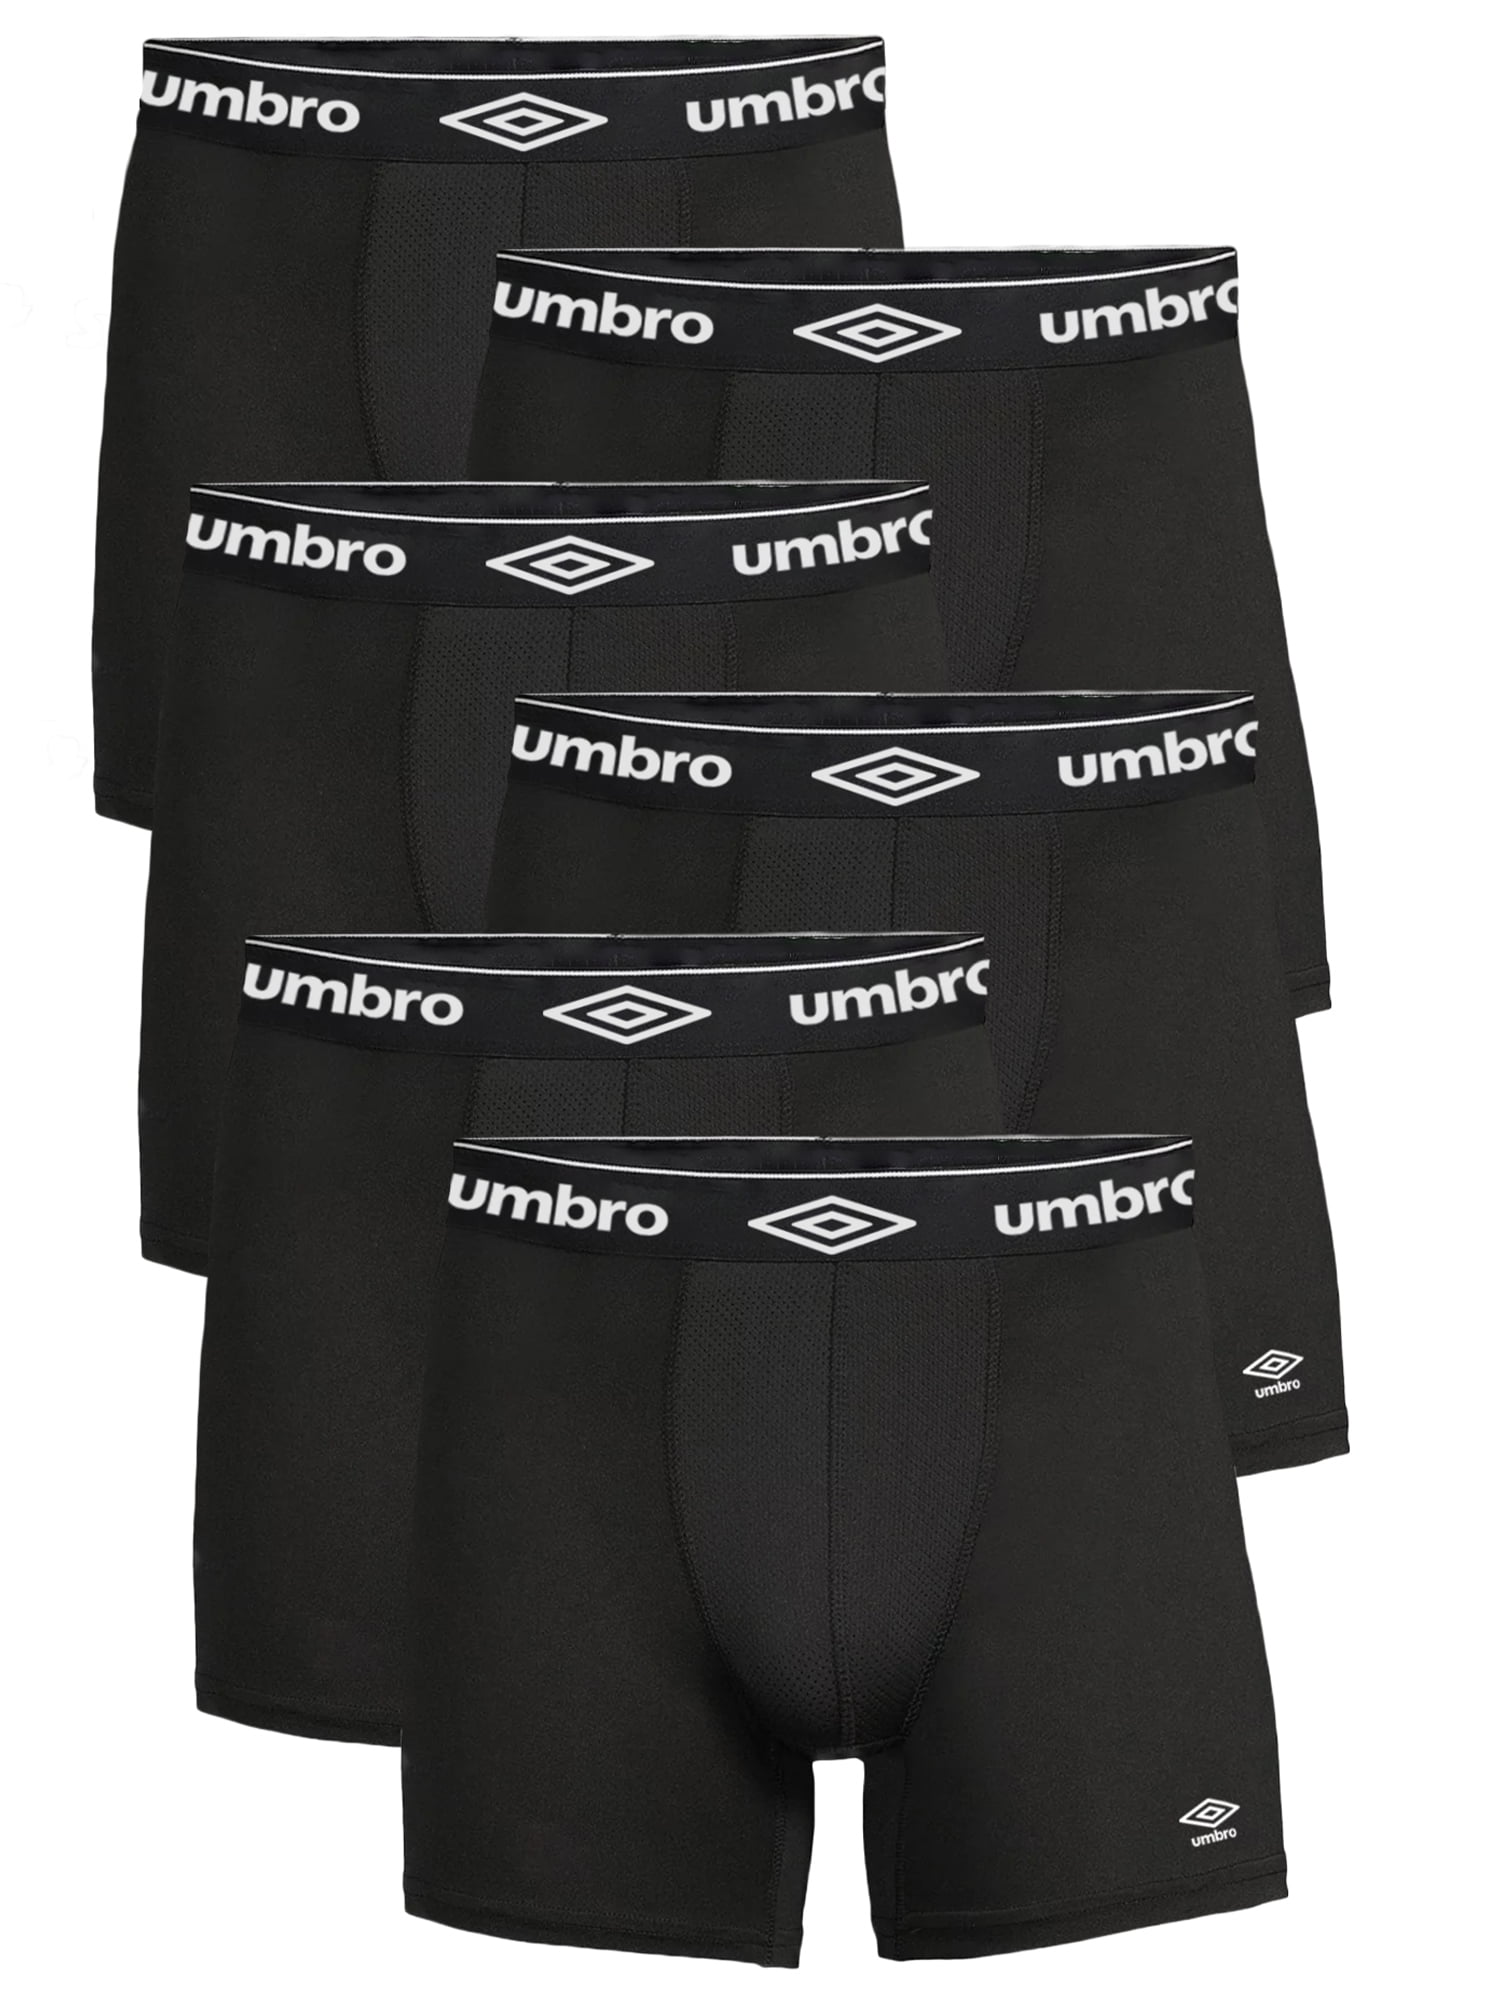 Umbro Mens Boxer Briefs Active Performance Breathable Underwear for Men ...